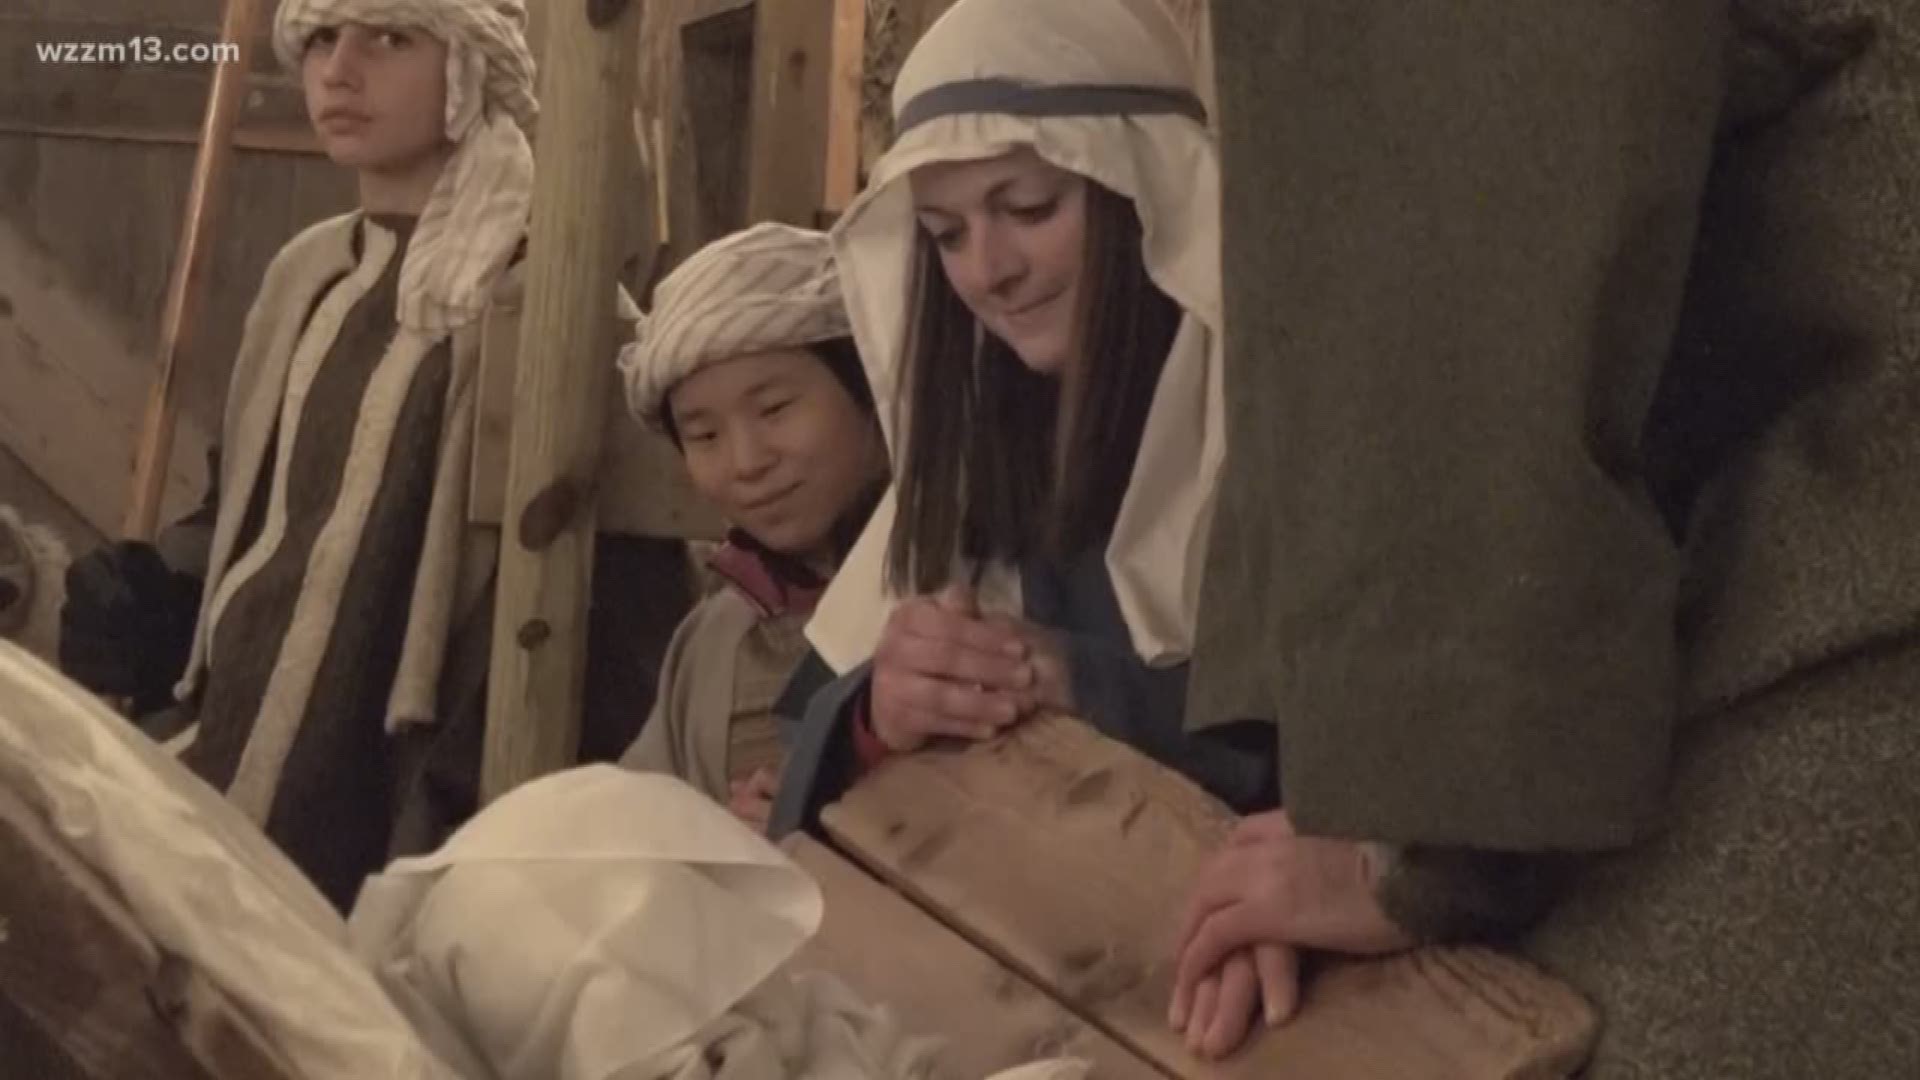 Critter Barn in Zeeland has a live nativity scene